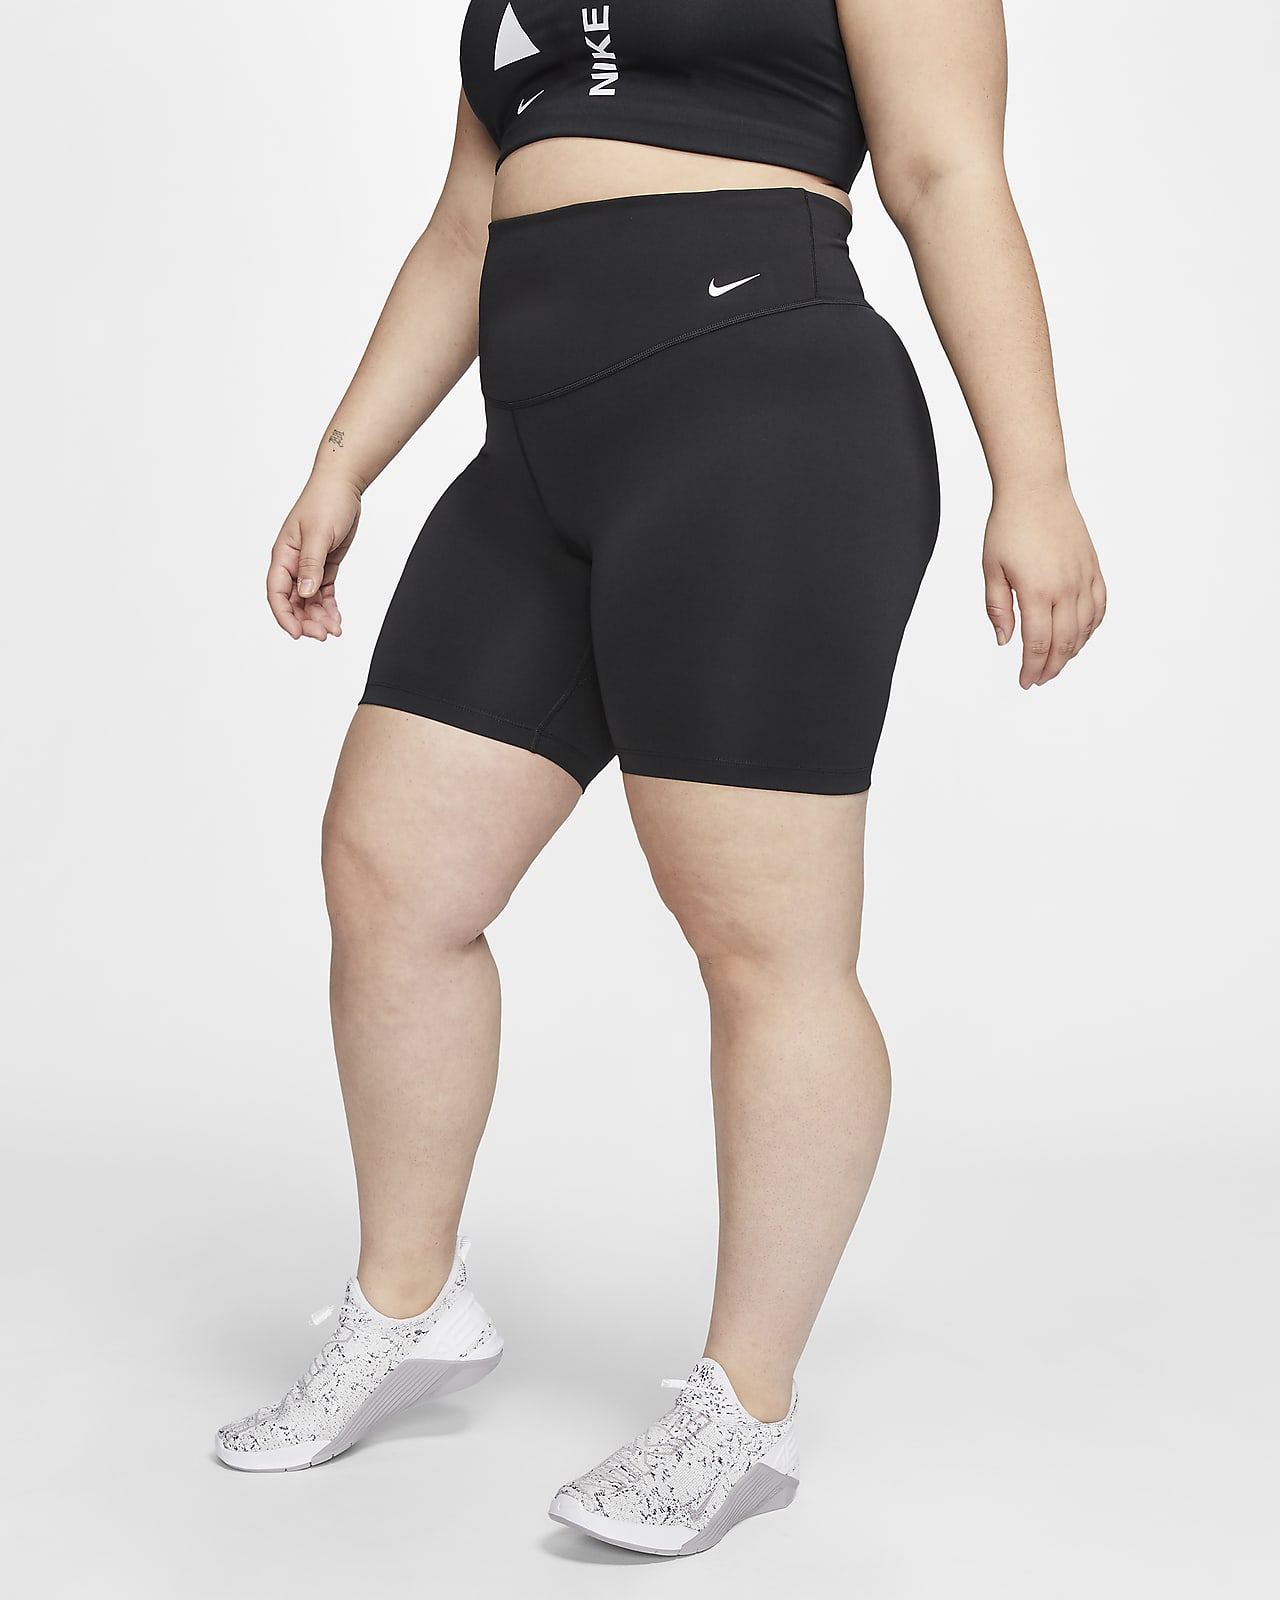 18cm (approx.) Shorts (Plus size). Nike AU